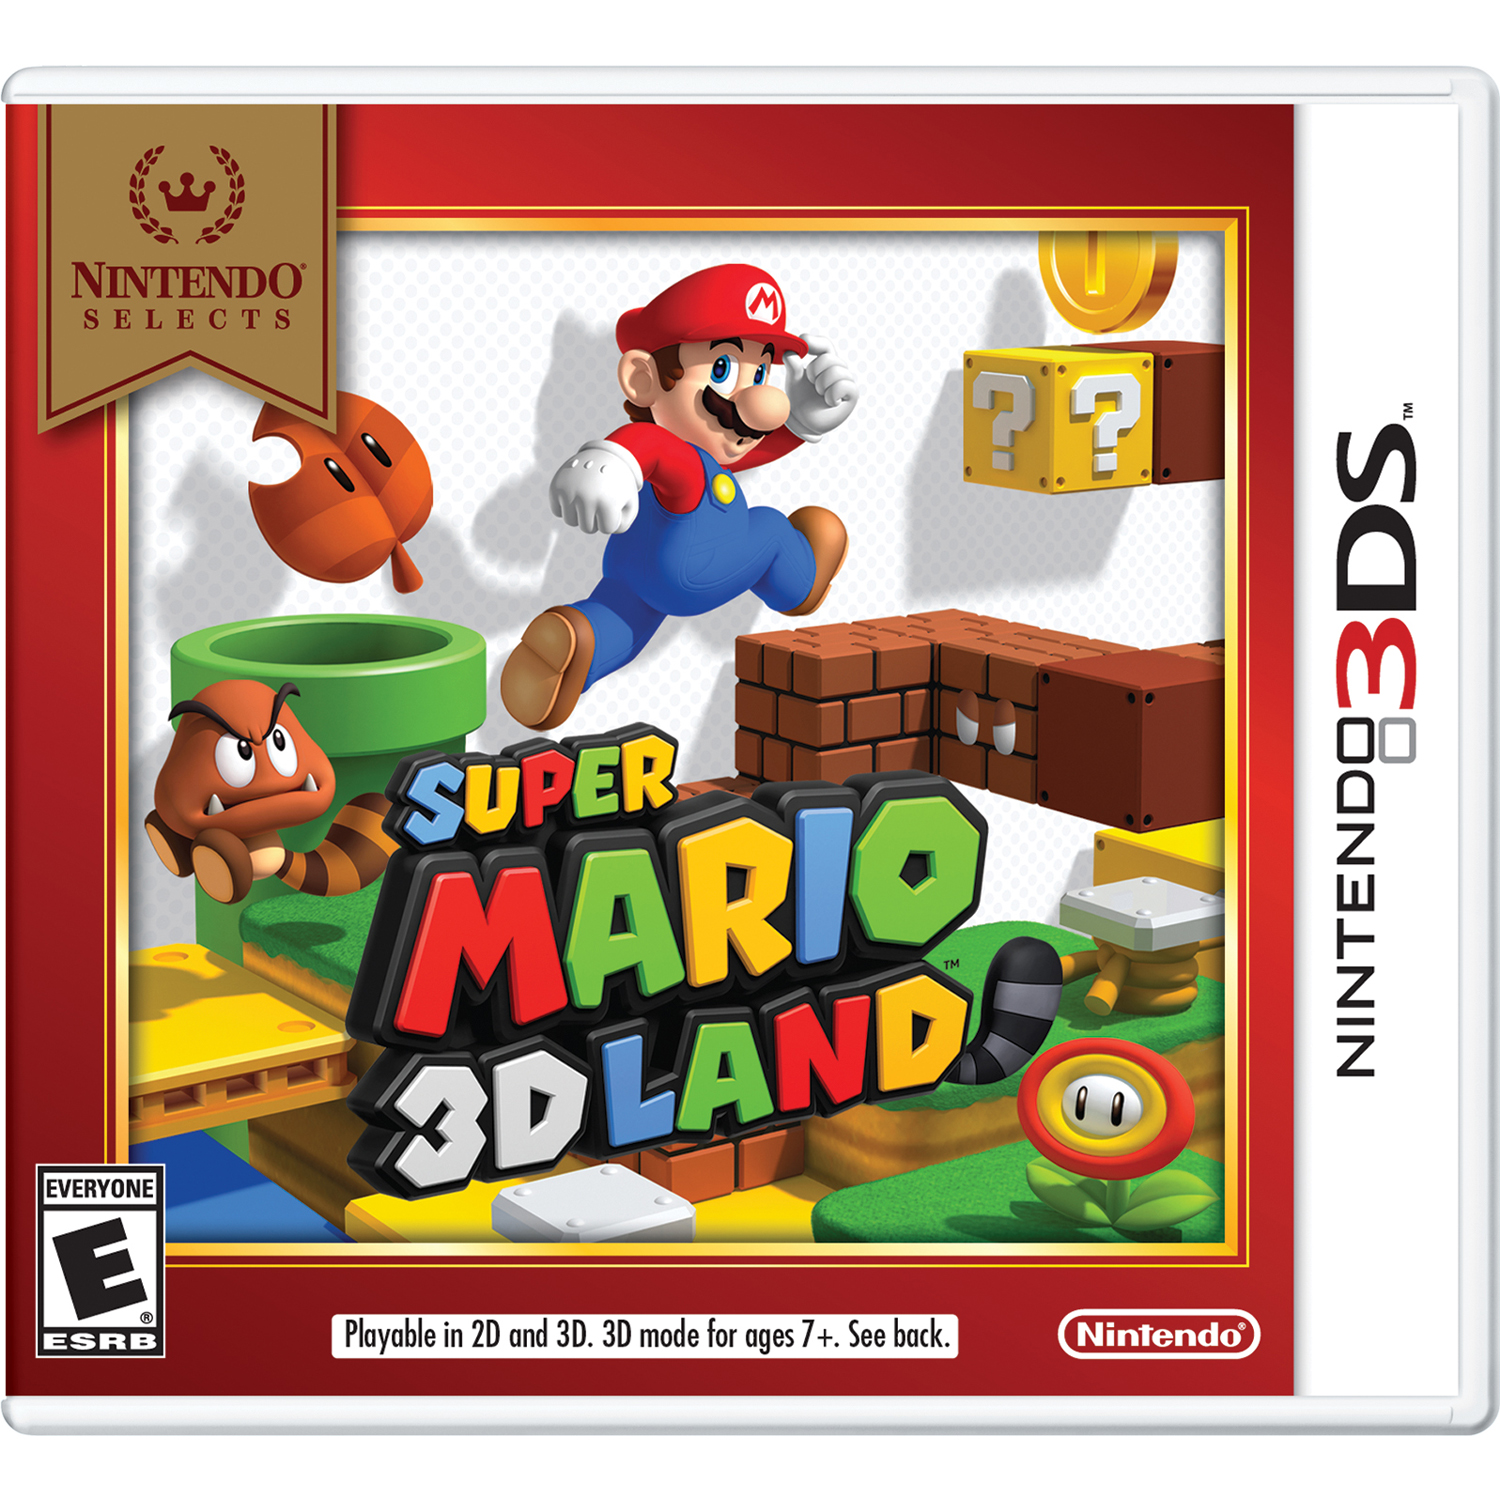 Super Mario 3D Land (Nintendo Selects), Nintendo, Nintendo 3DS, 045496744946 - image 4 of 4